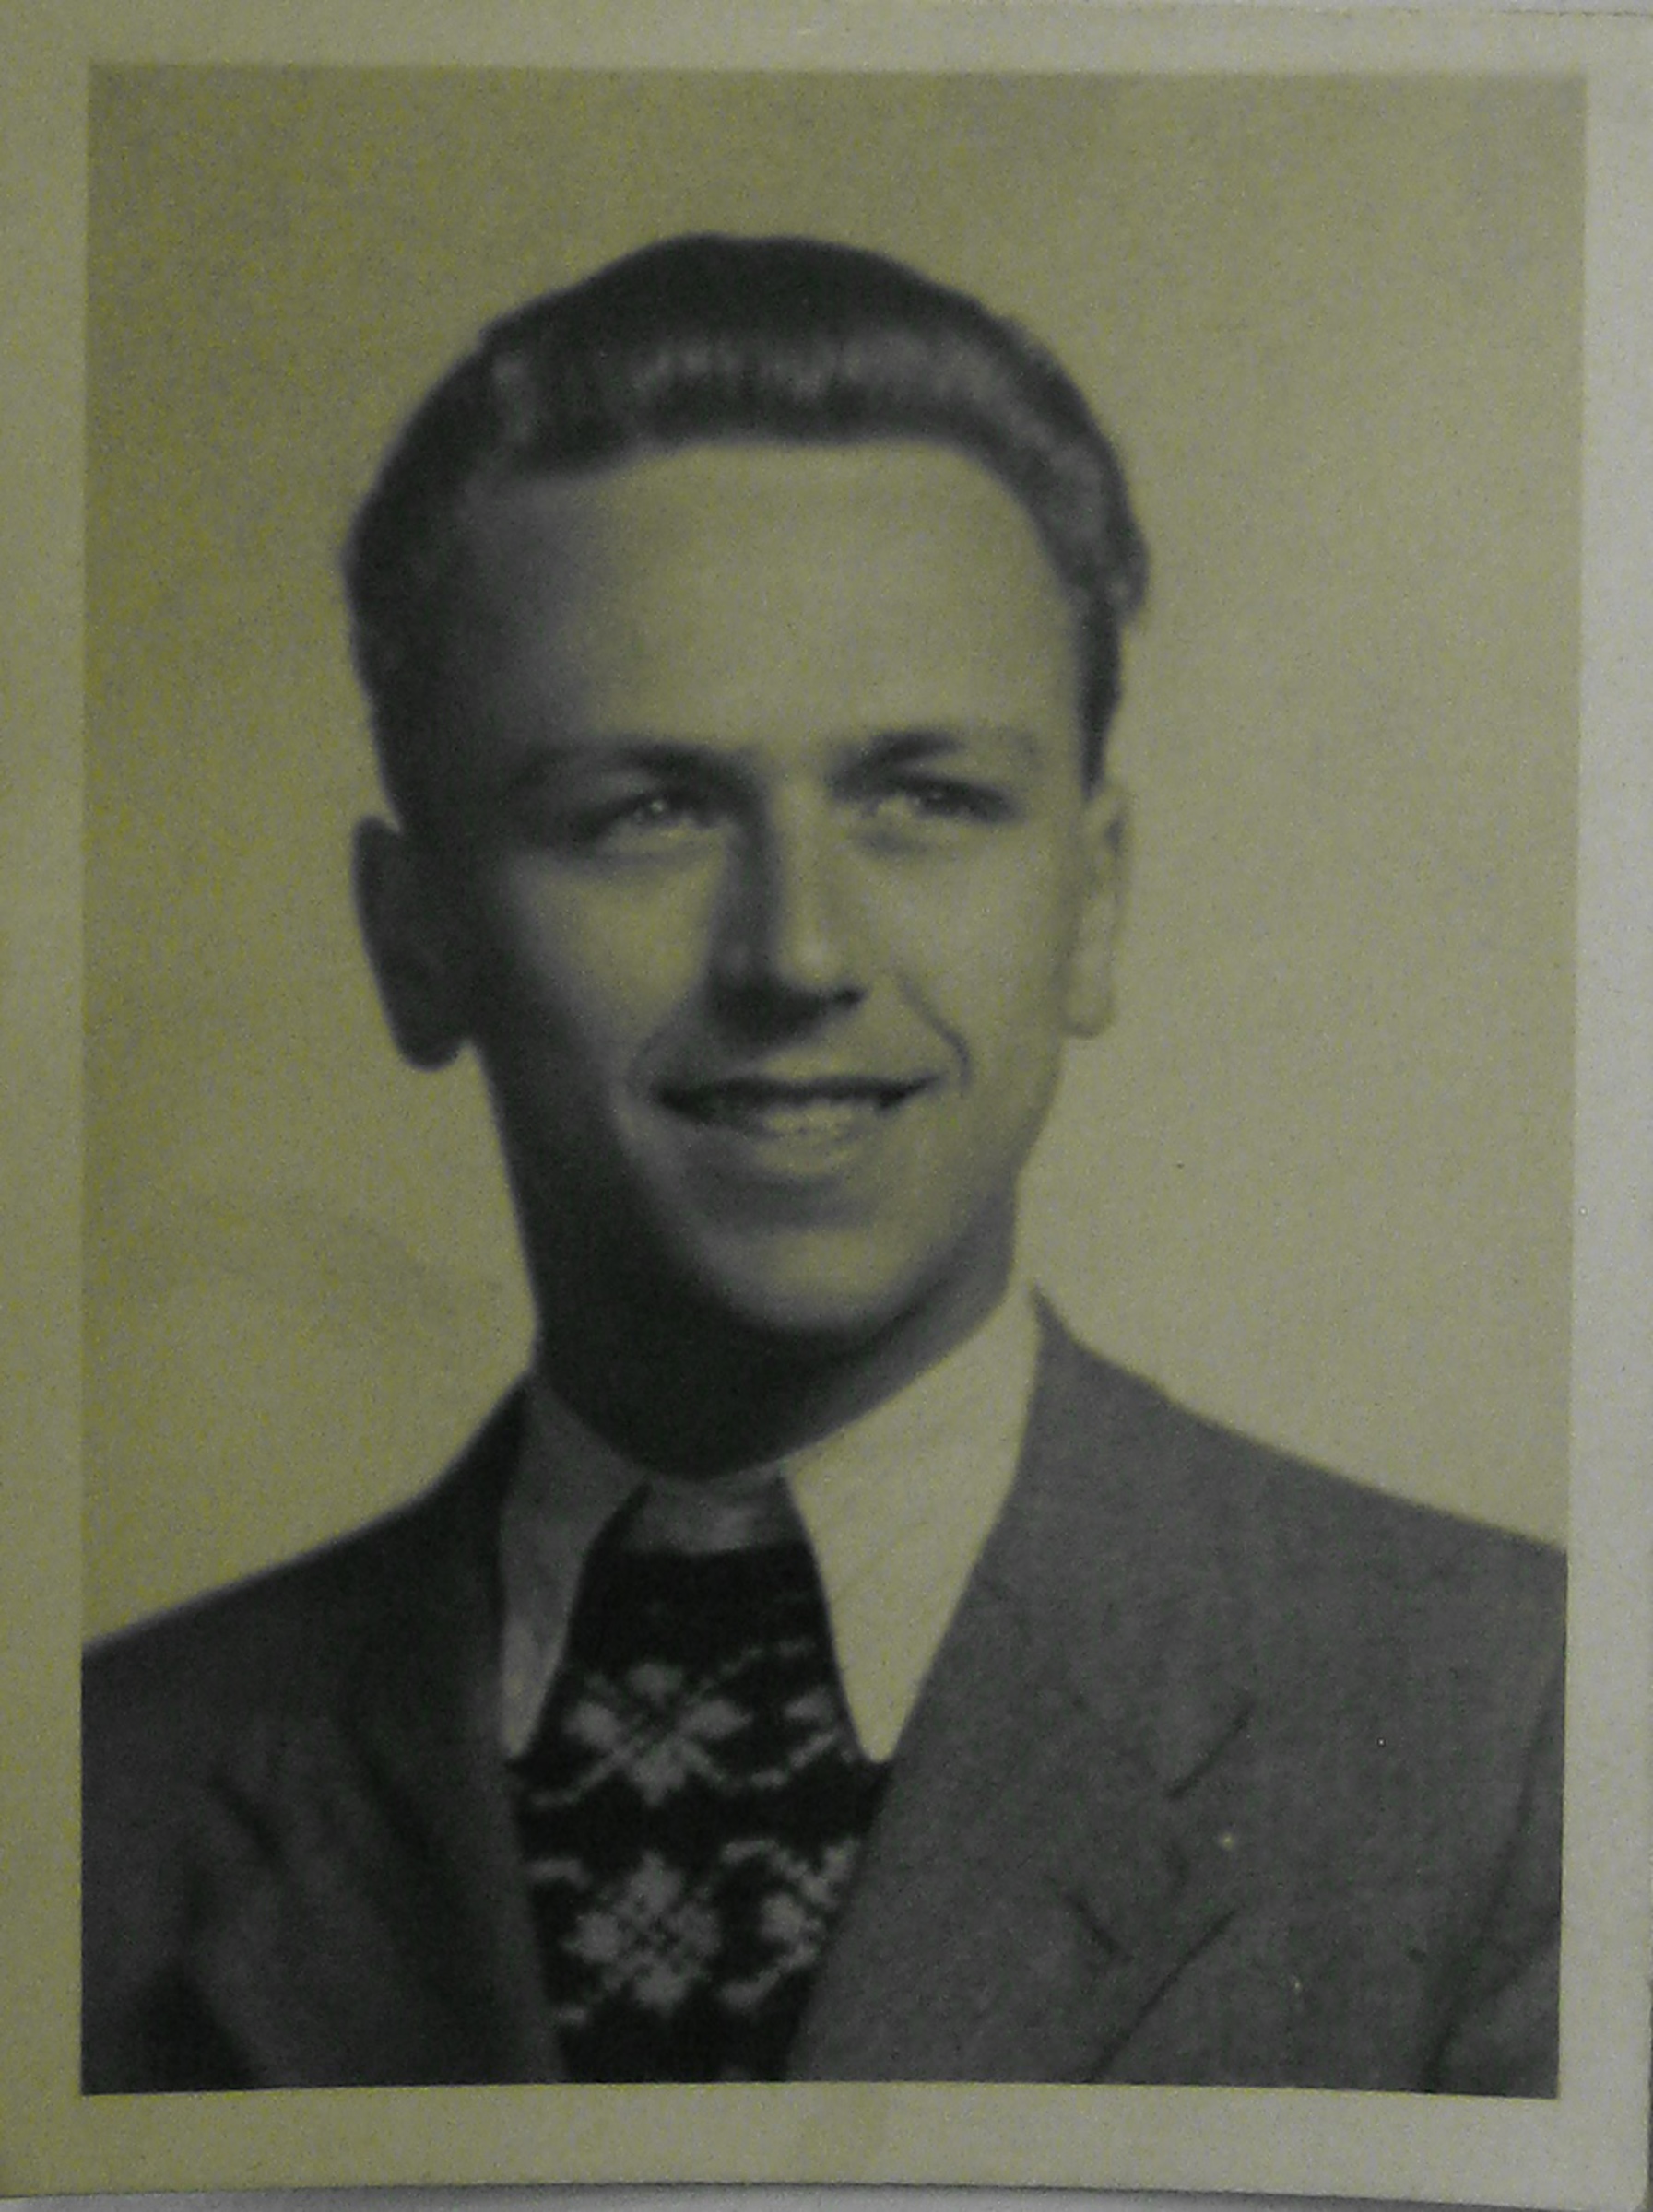 Zdeněk Kraus, photo from his graduating class poster